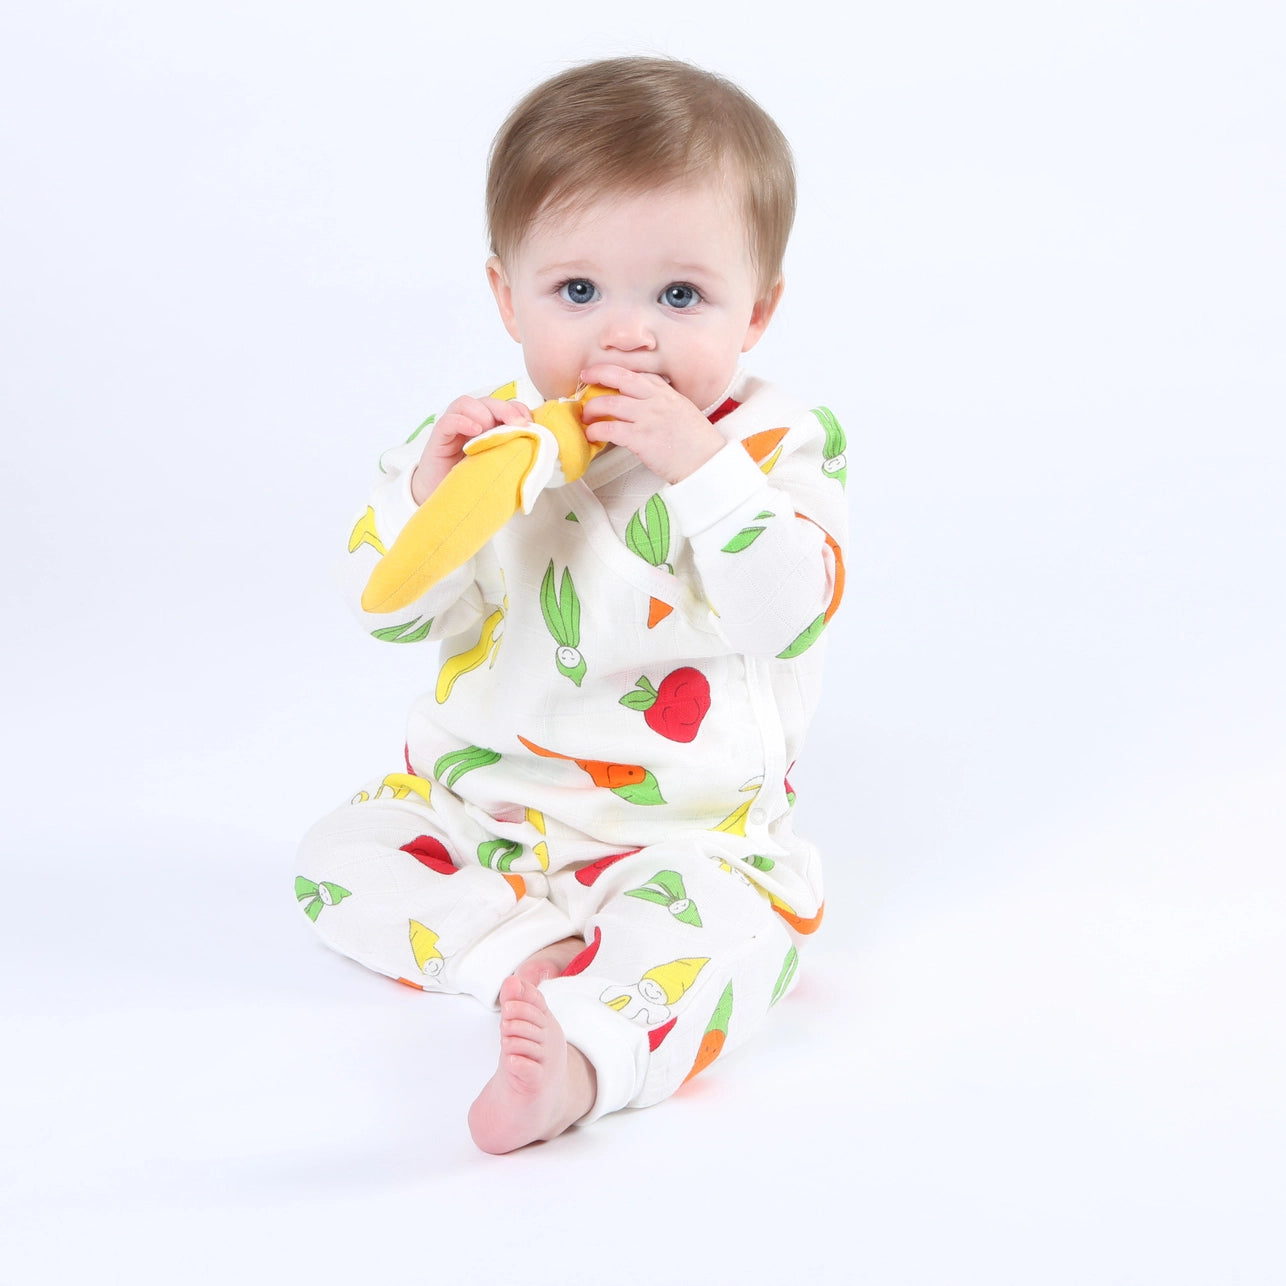 Organic Baby Muslin Side Snap Kimono - Veggie Print (Newborn)